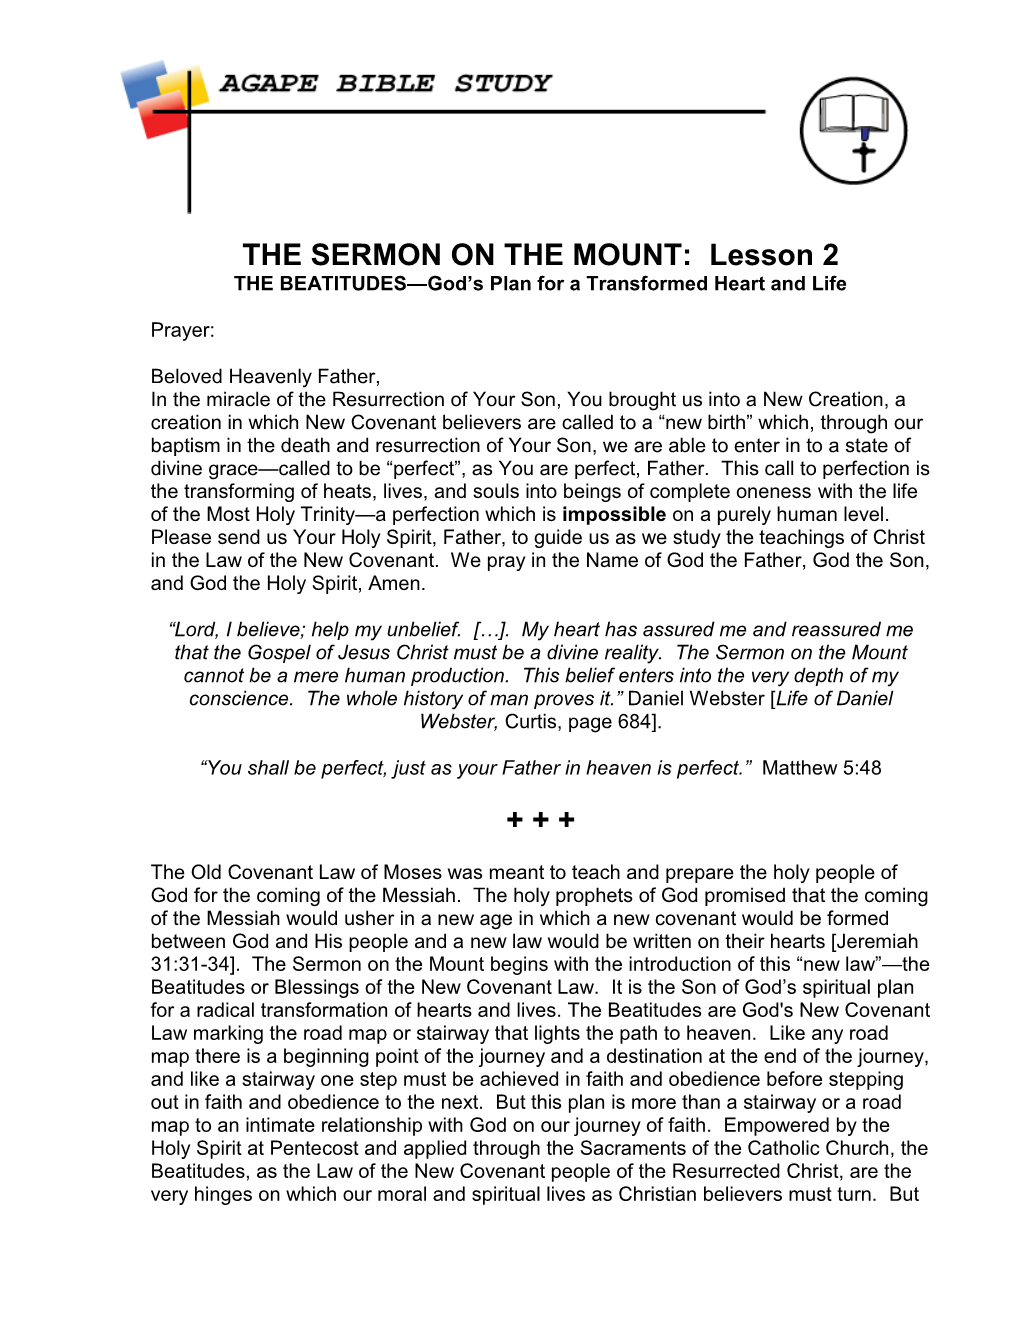 THE SERMON on the MOUNT: Lesson 2 +